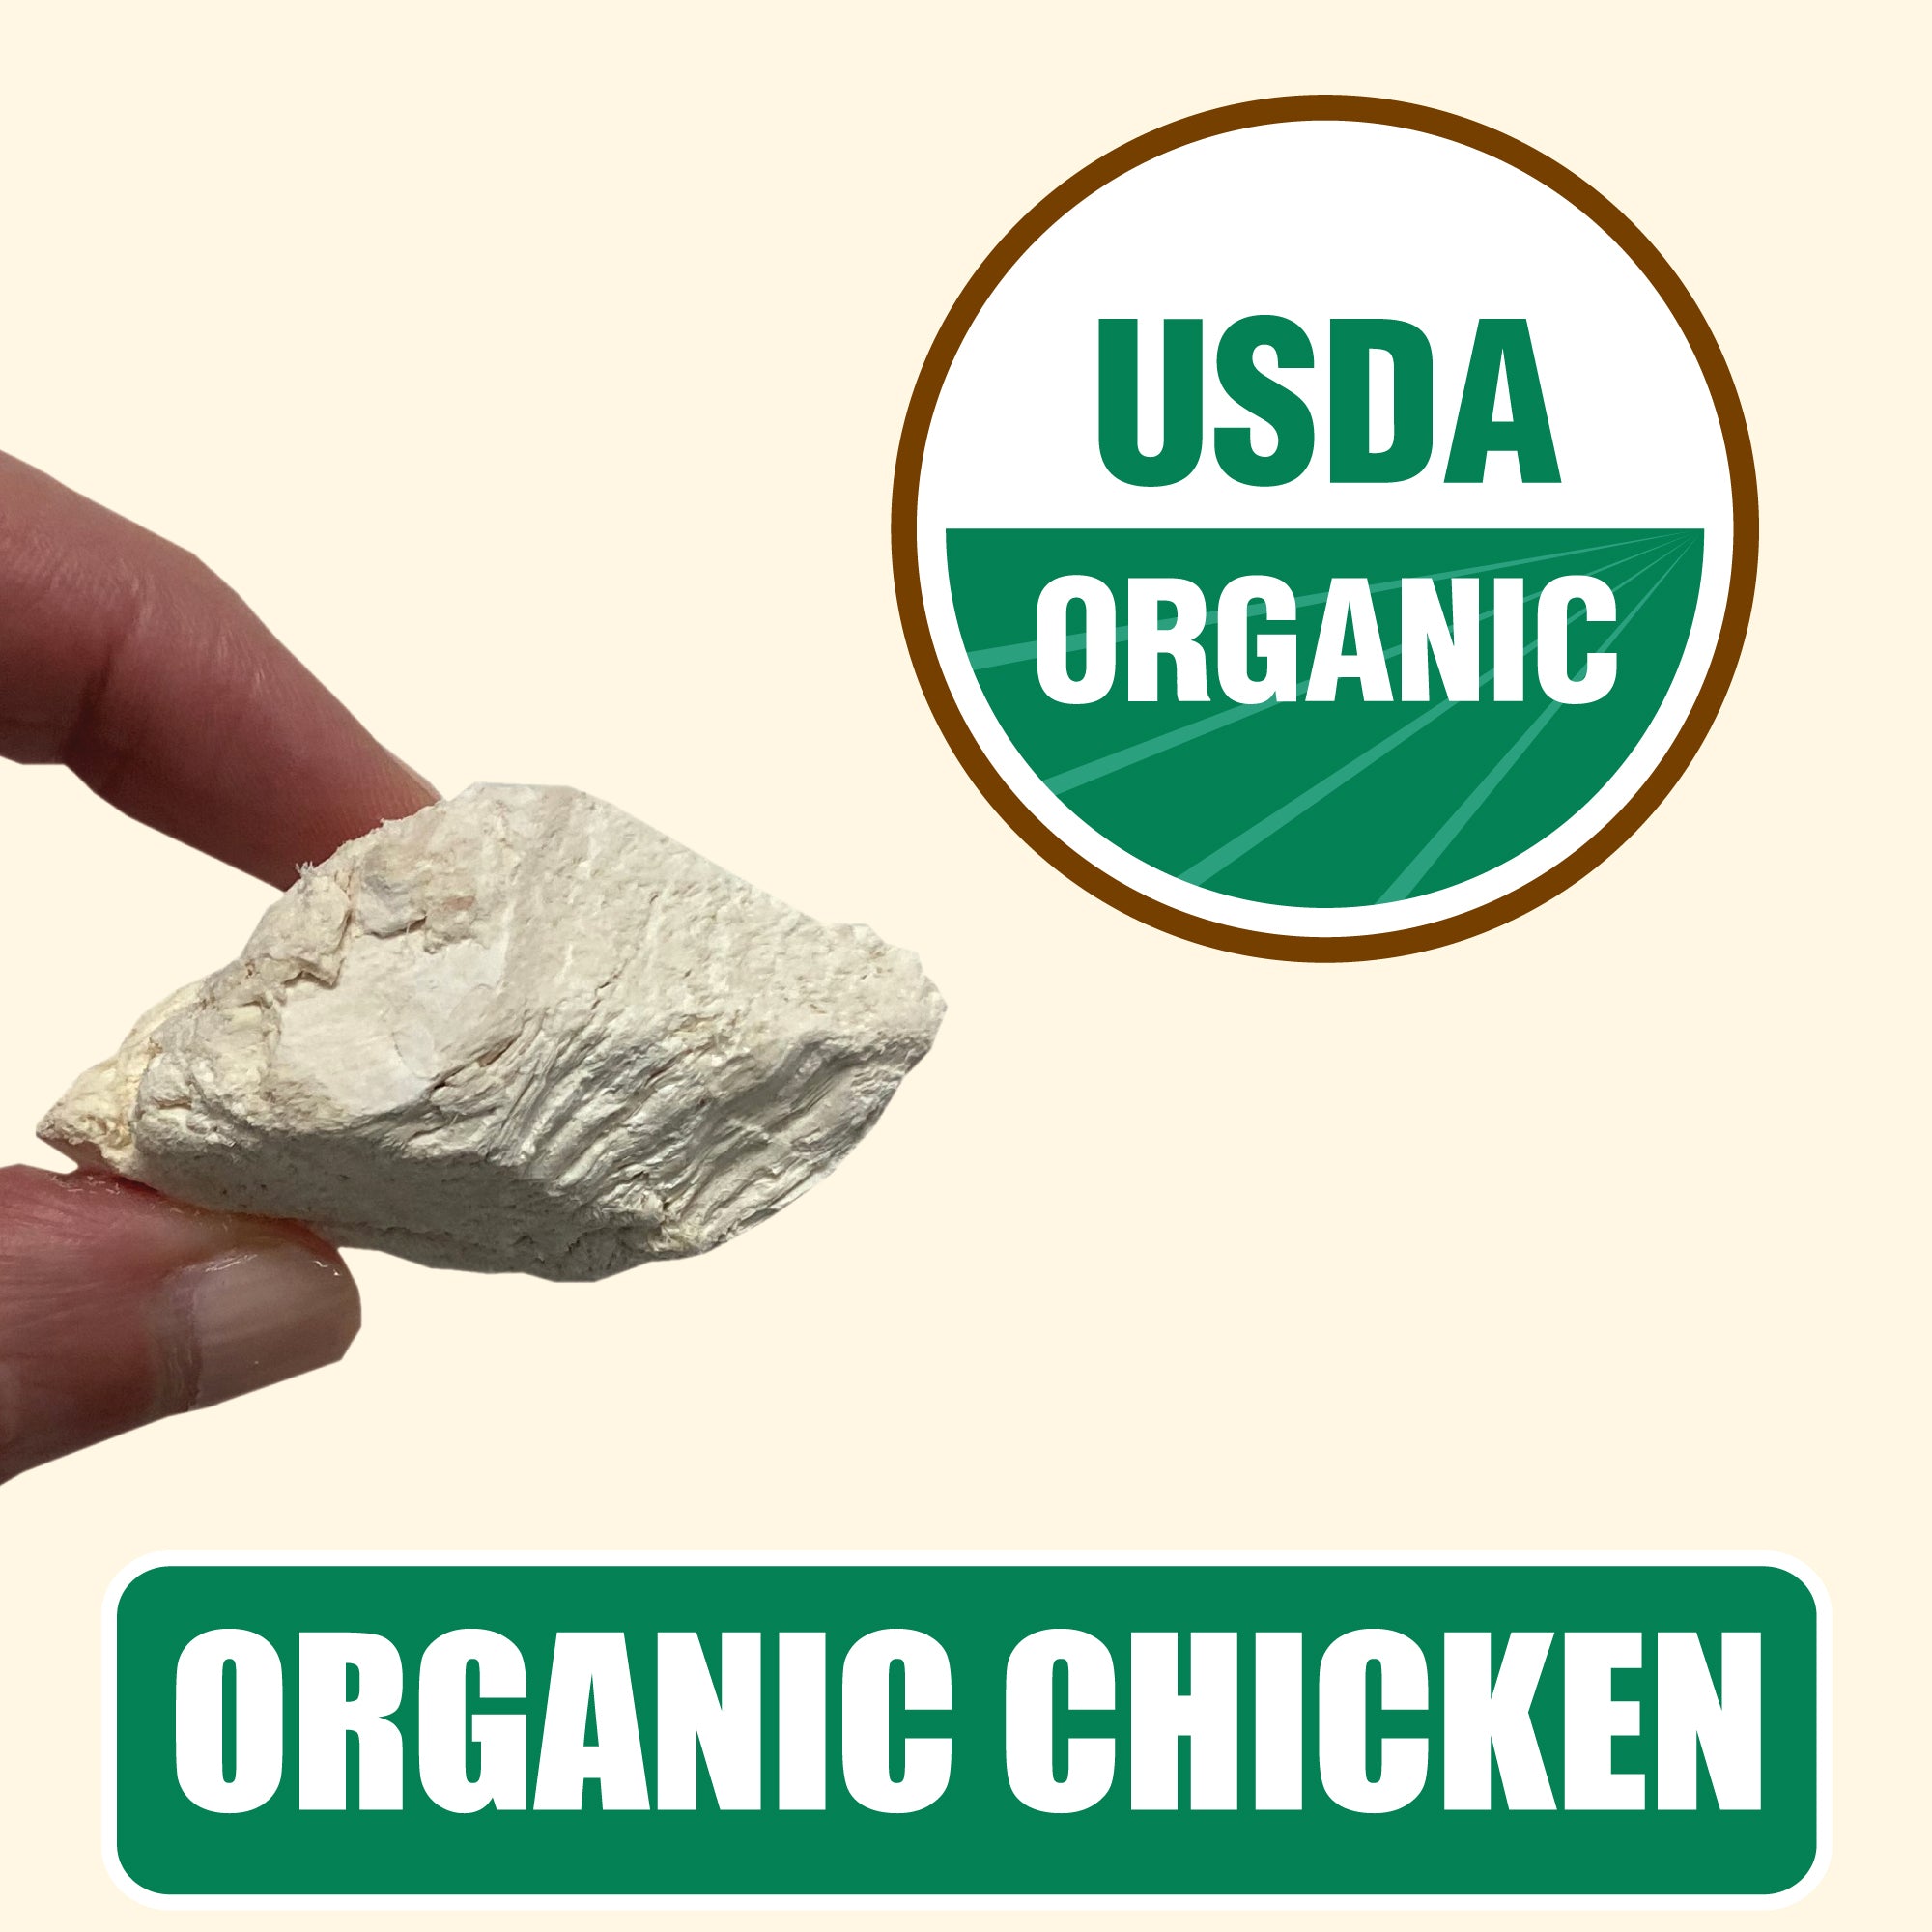 Organic Chicken Treats For Cats